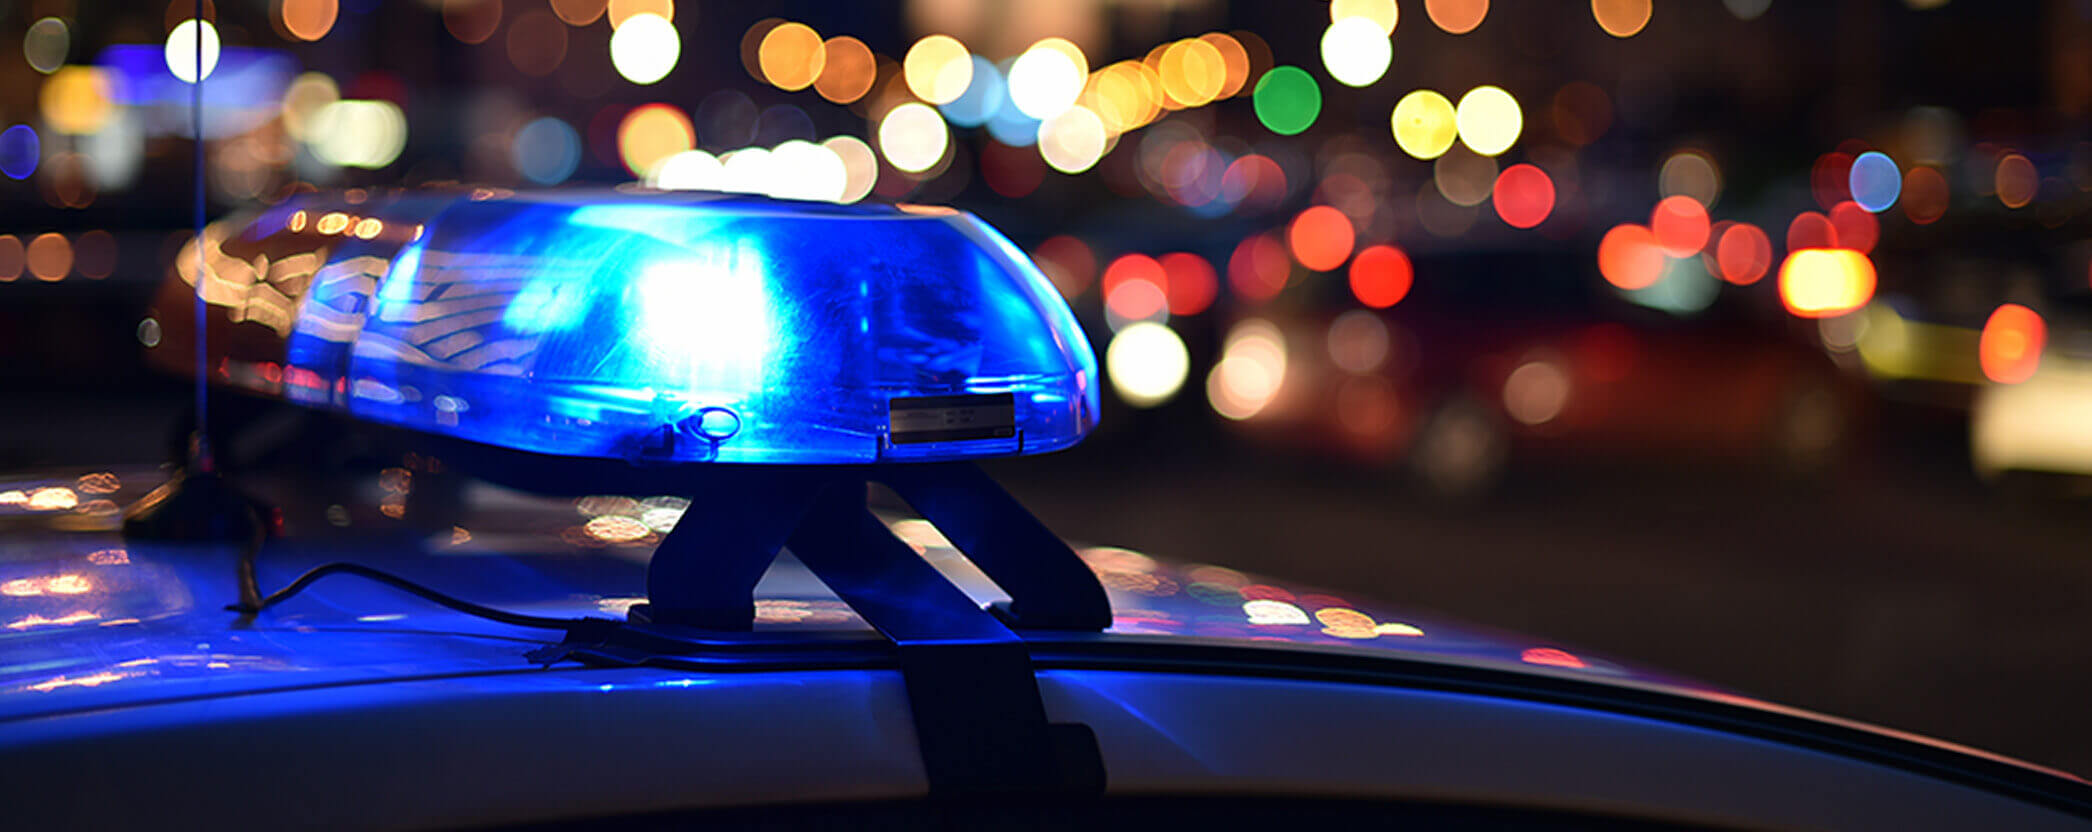 Blue light atop a police car at night